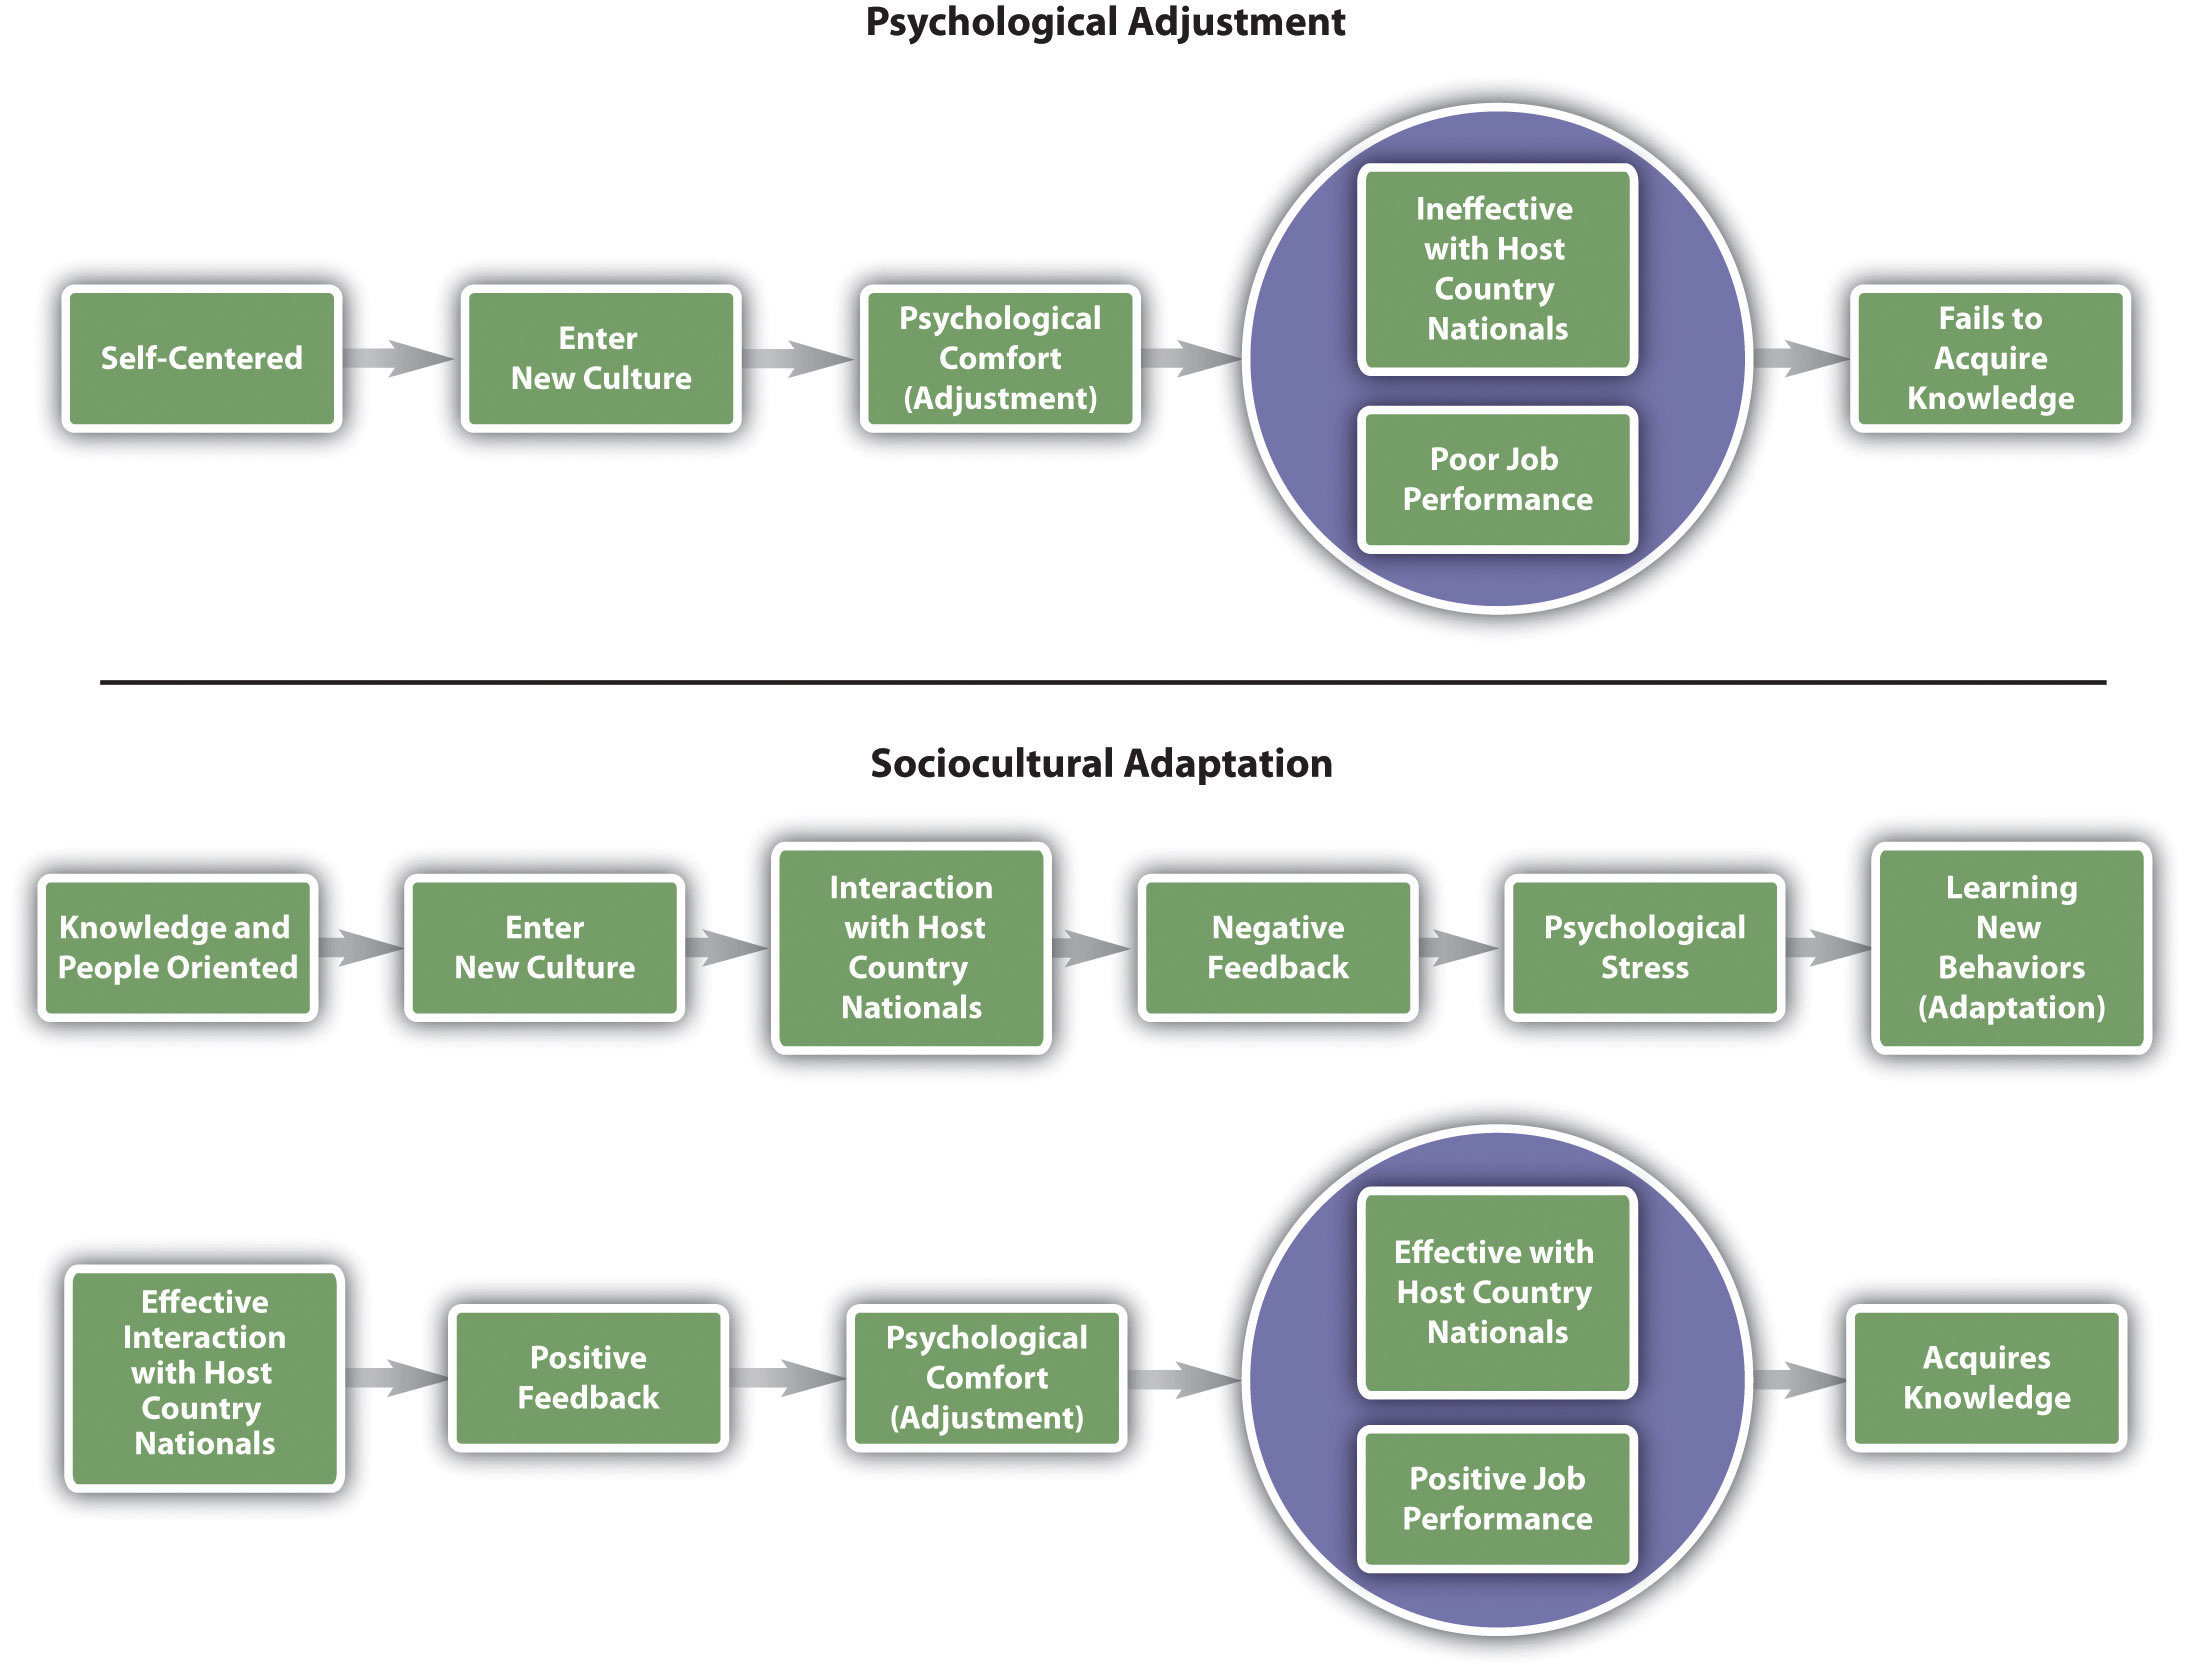 Blakeney's Model of Psychological versus Sociocultural Adaption